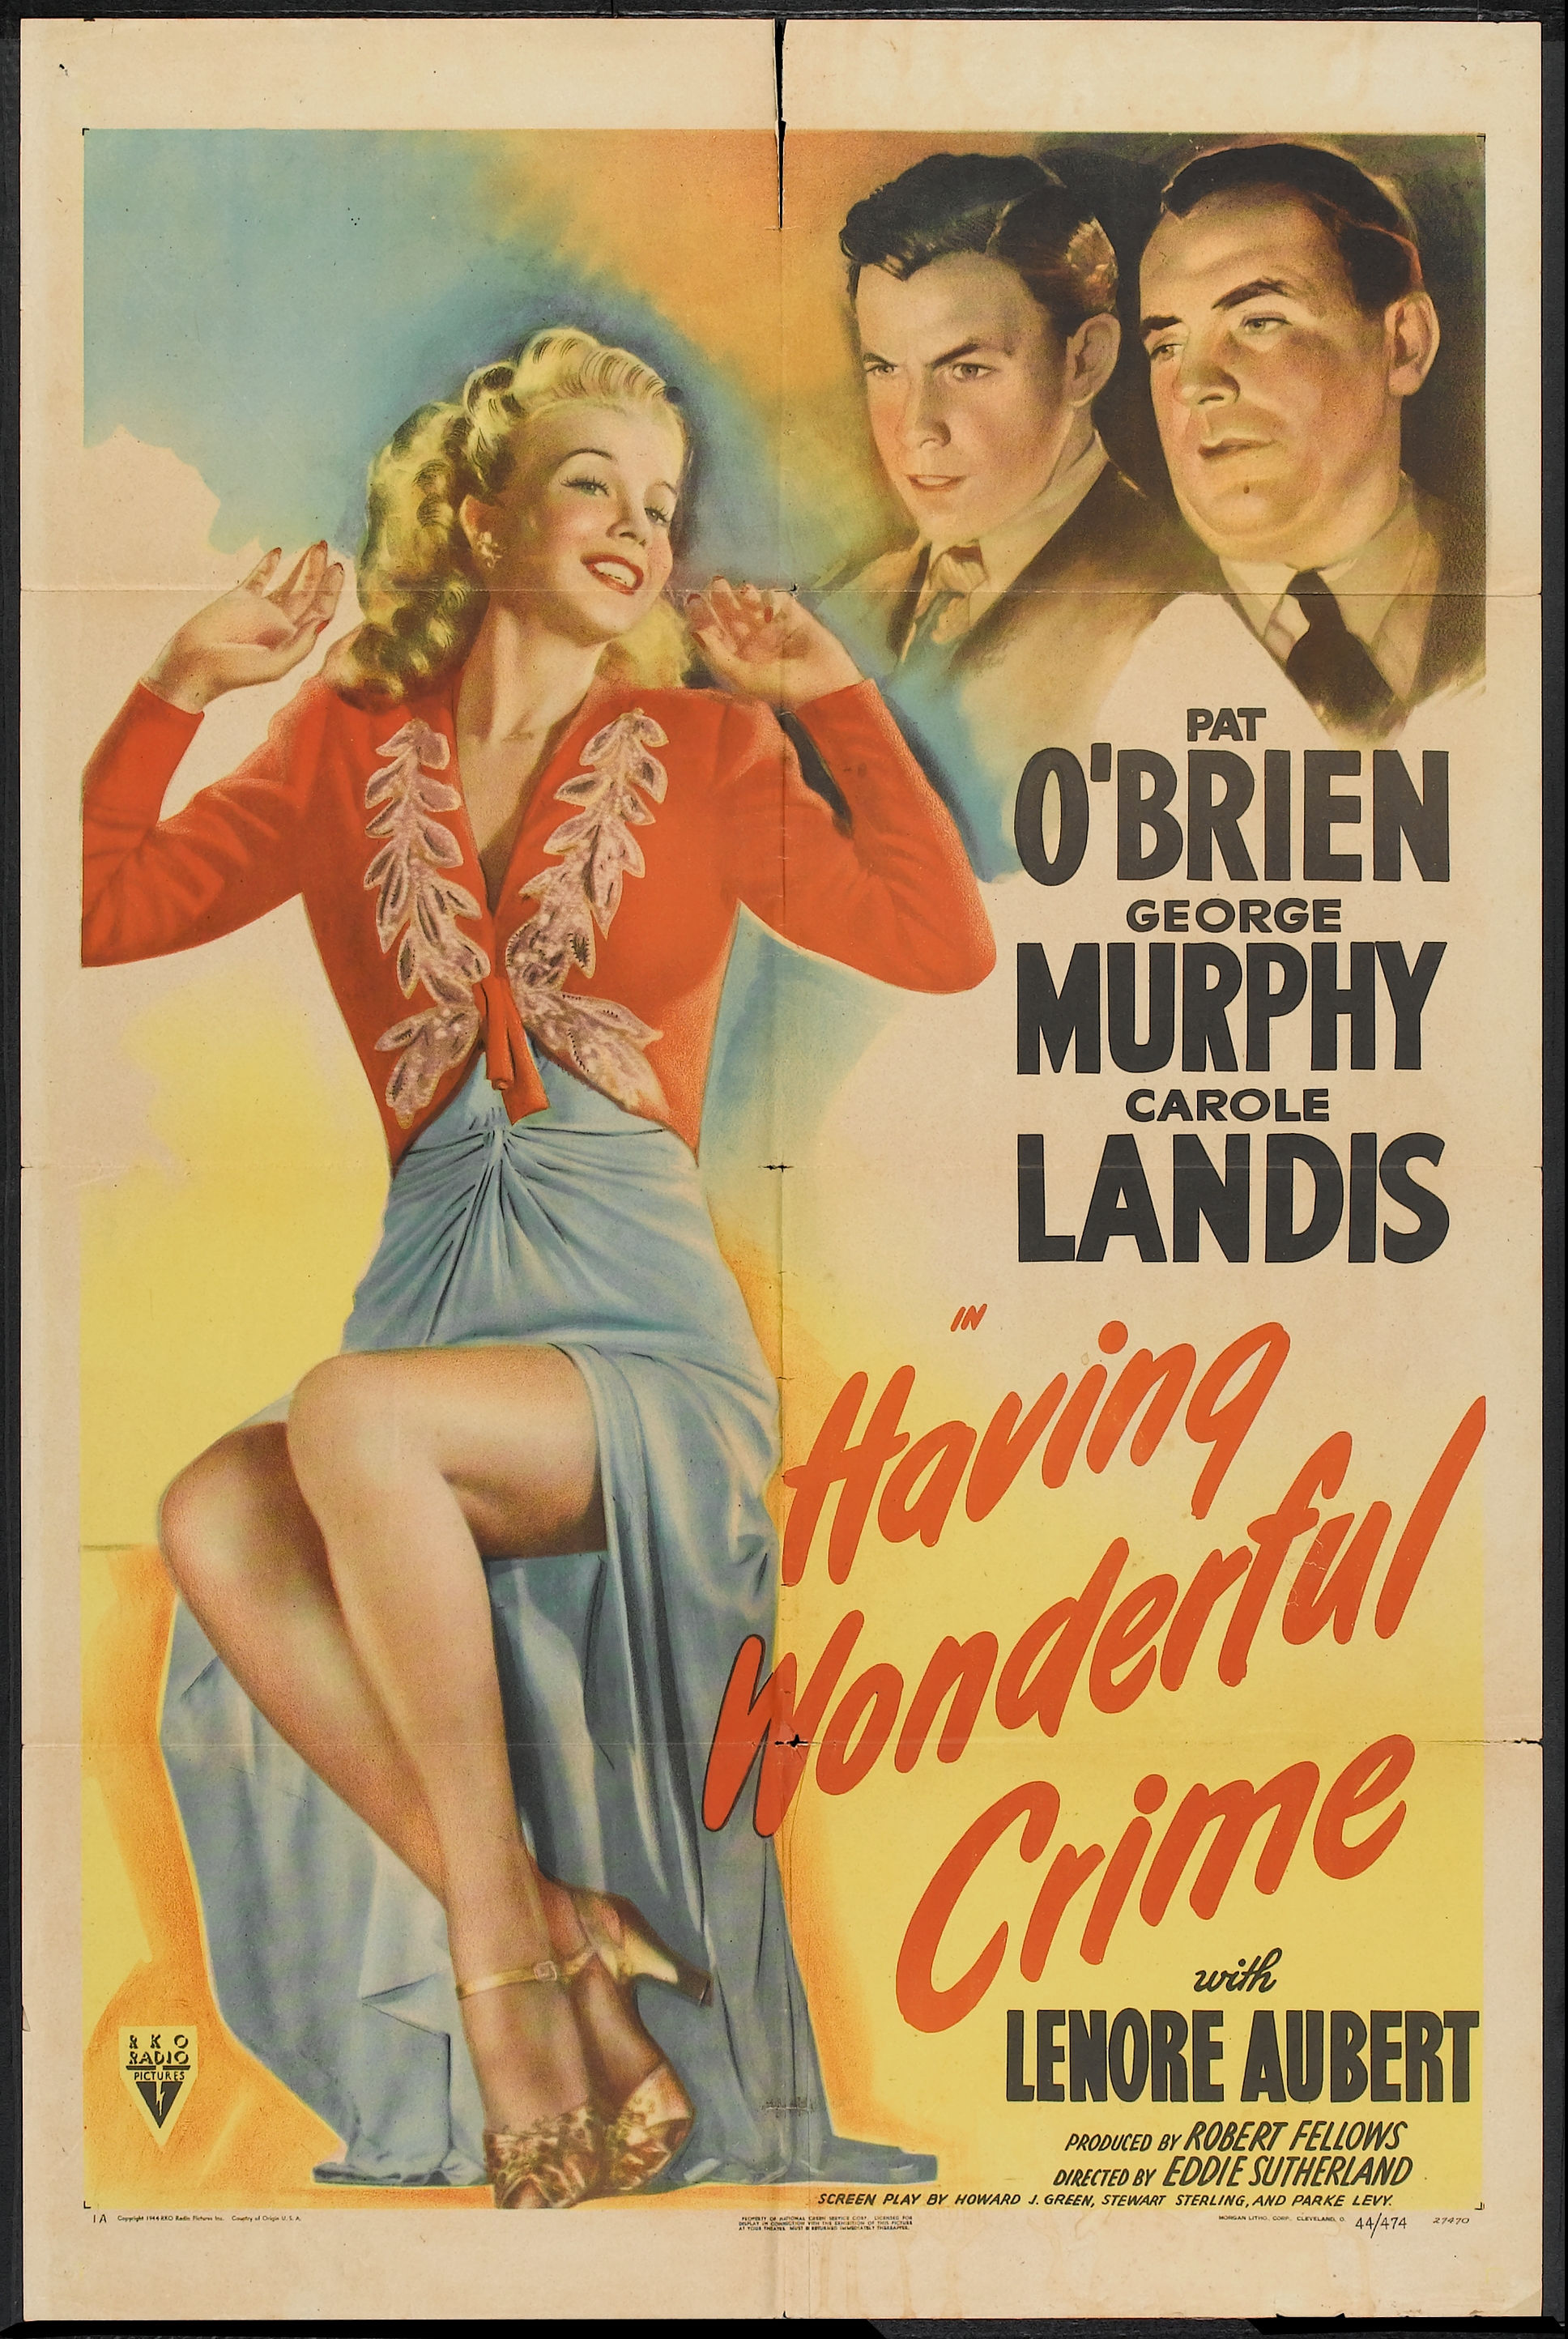 HAVING A WONDERFUL CRIME (1945)